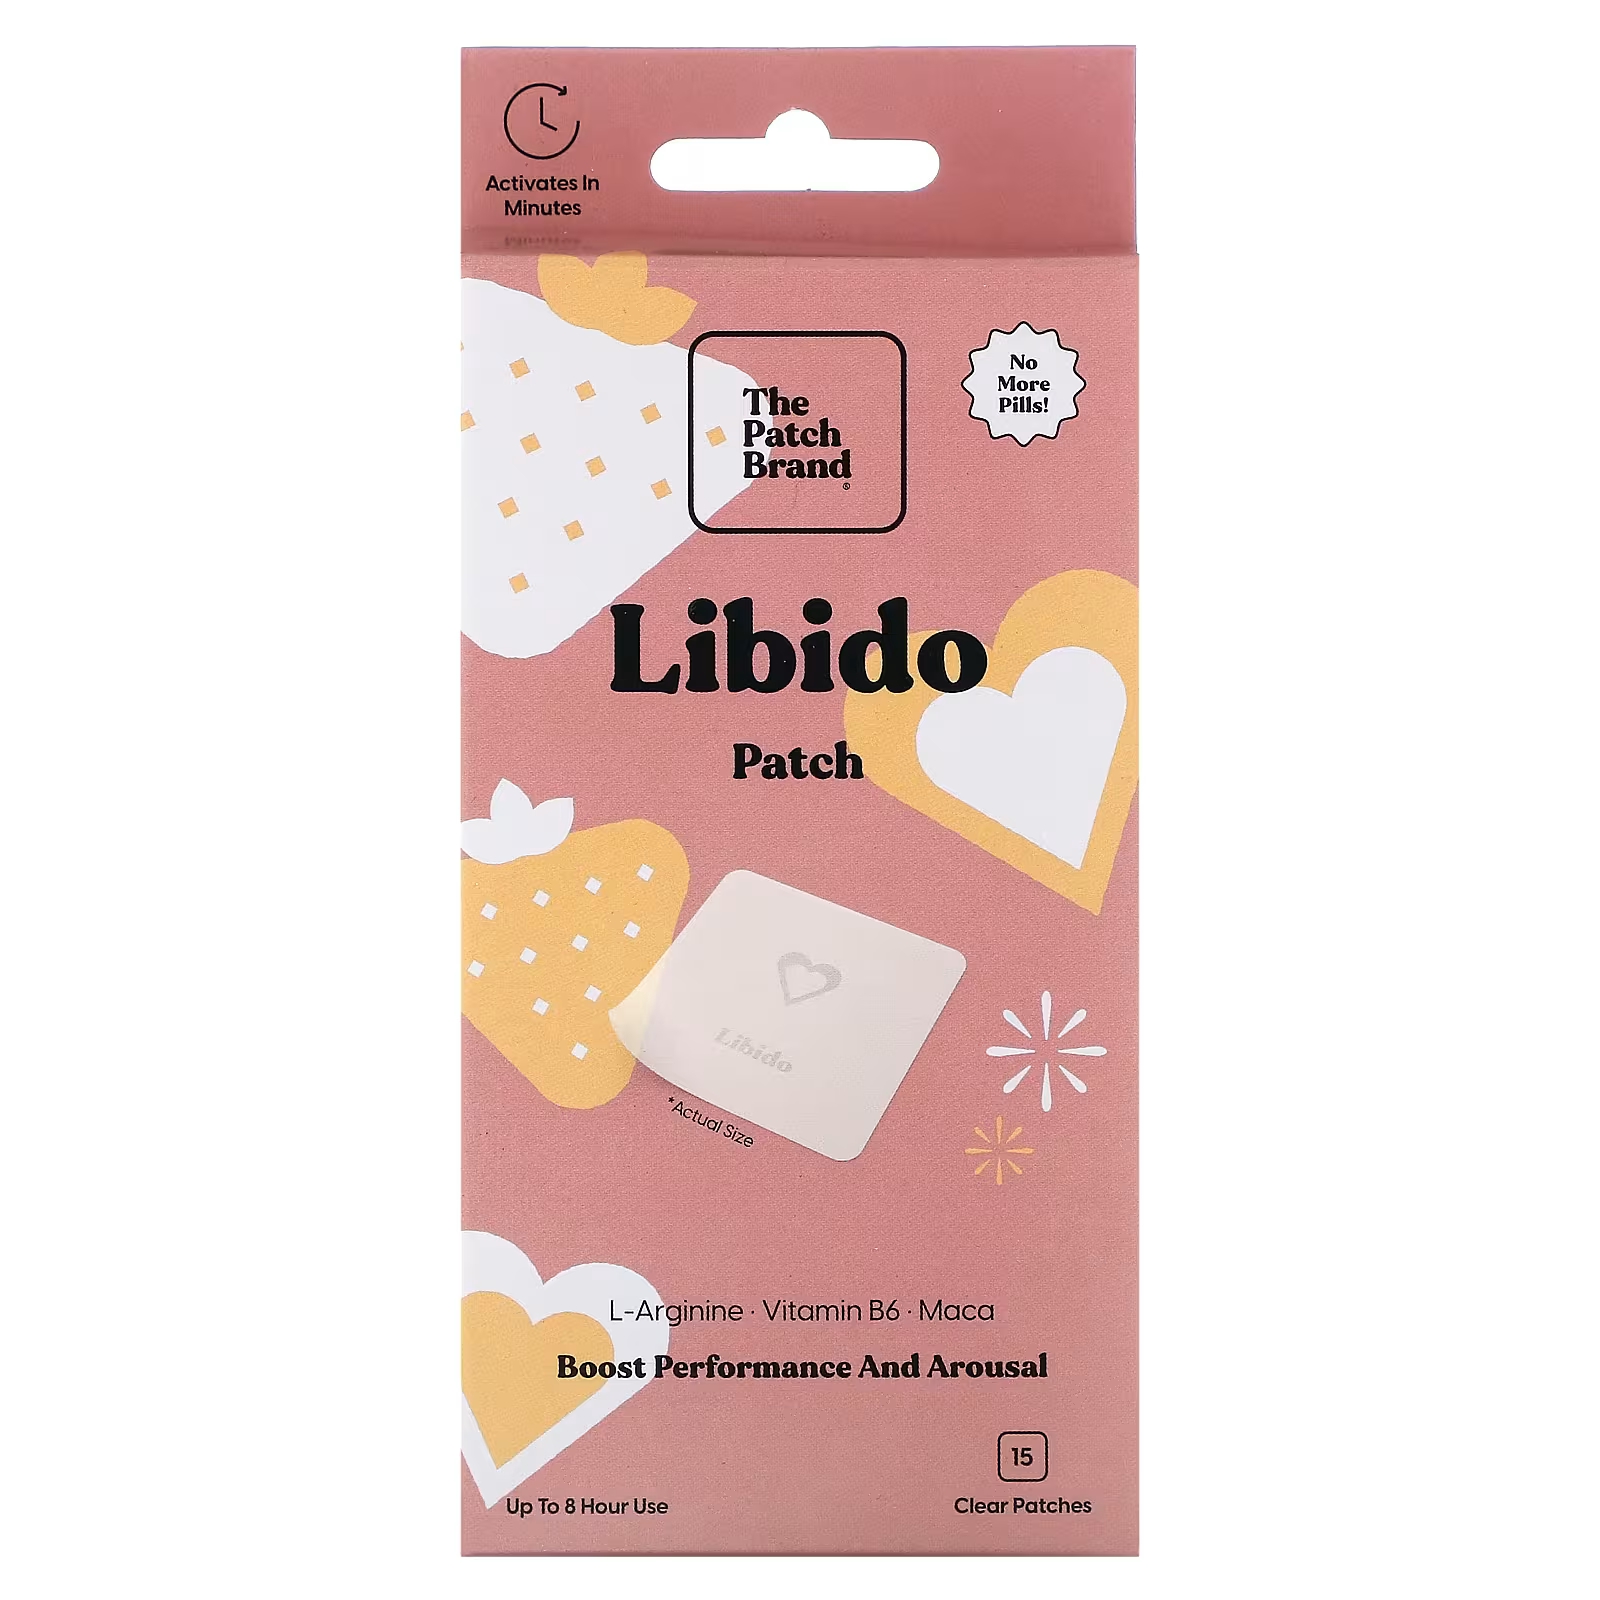 The Patch Brand Libido Patch 15 прозрачных патчей